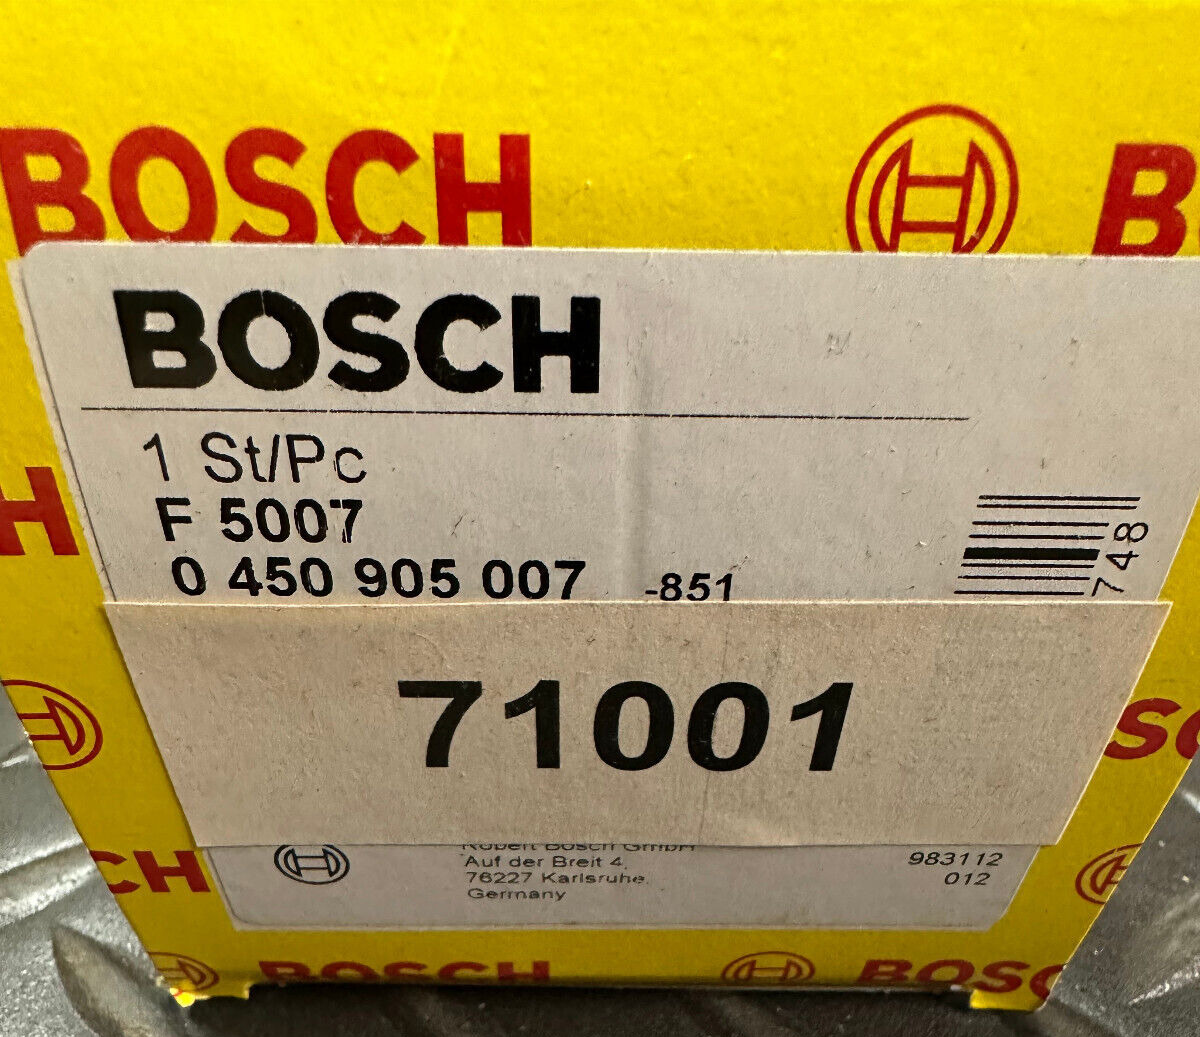 BOSCH Fuel Filter - #71001 / 0450905007 - Fits Mercedes-Benz